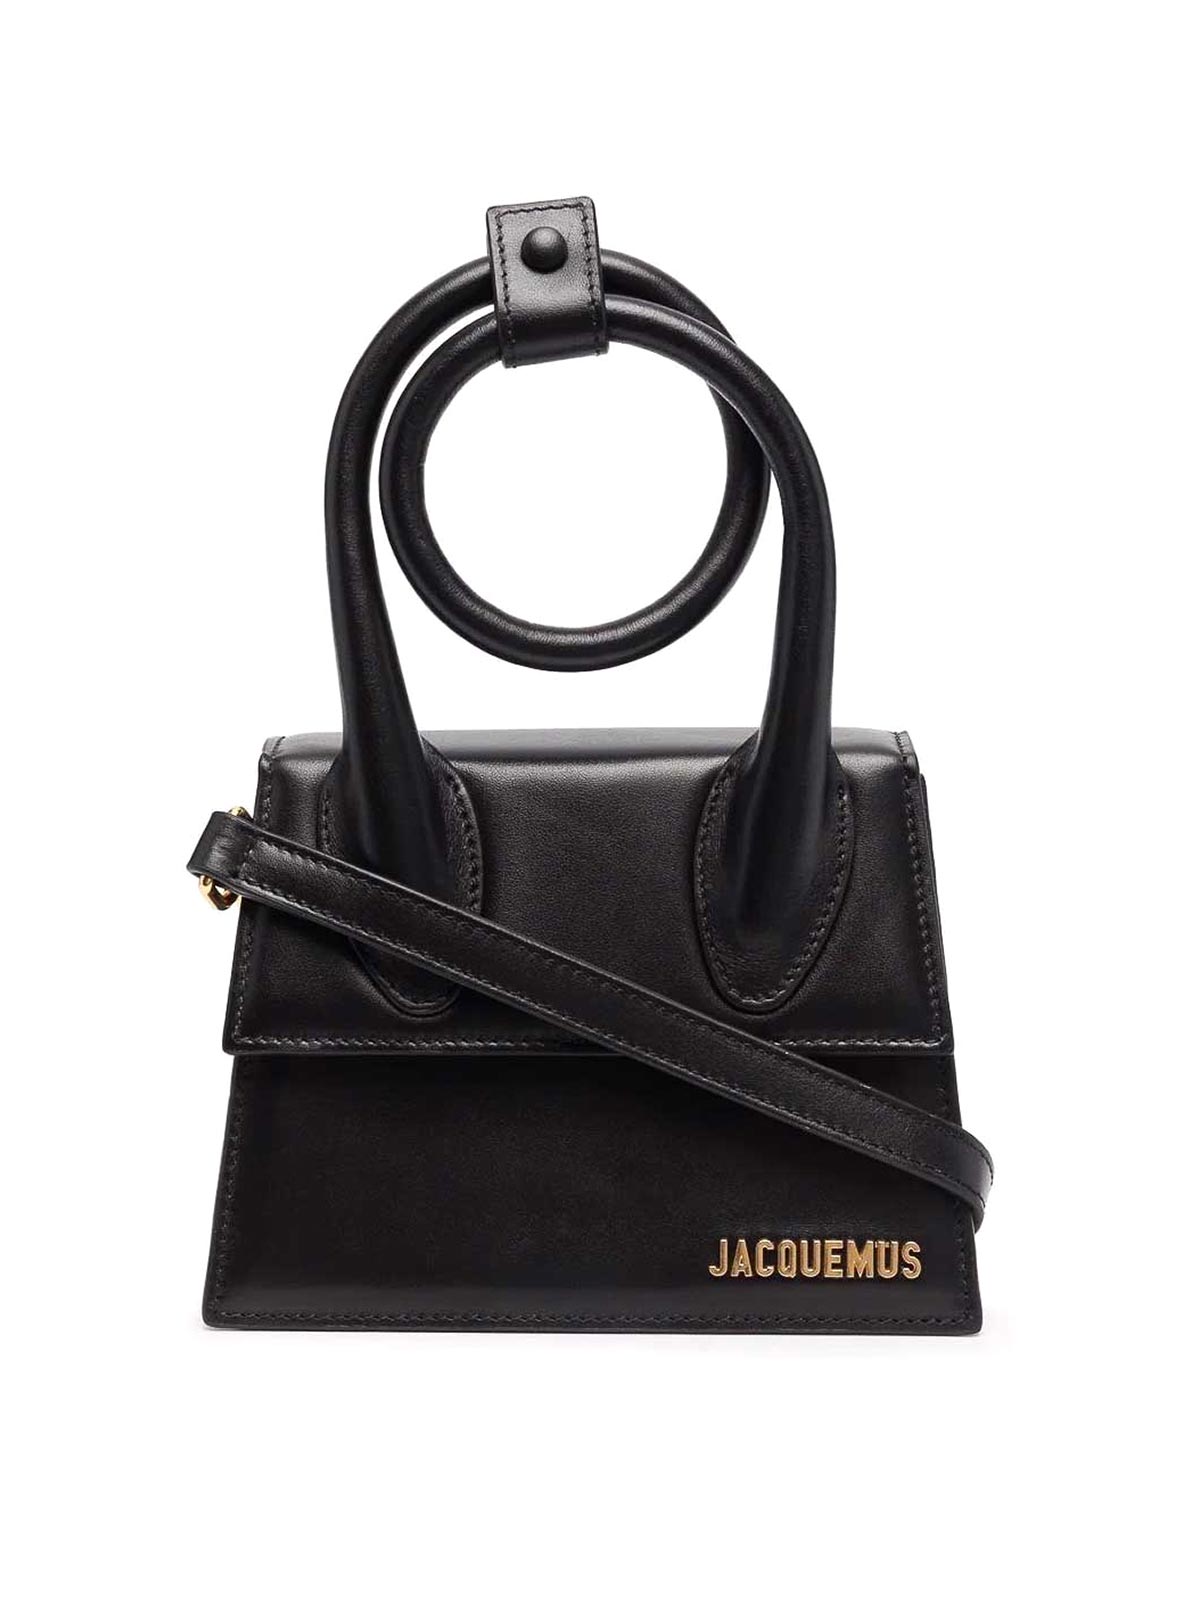 Jacquemus Le Chiquito Noeud Bag In Black